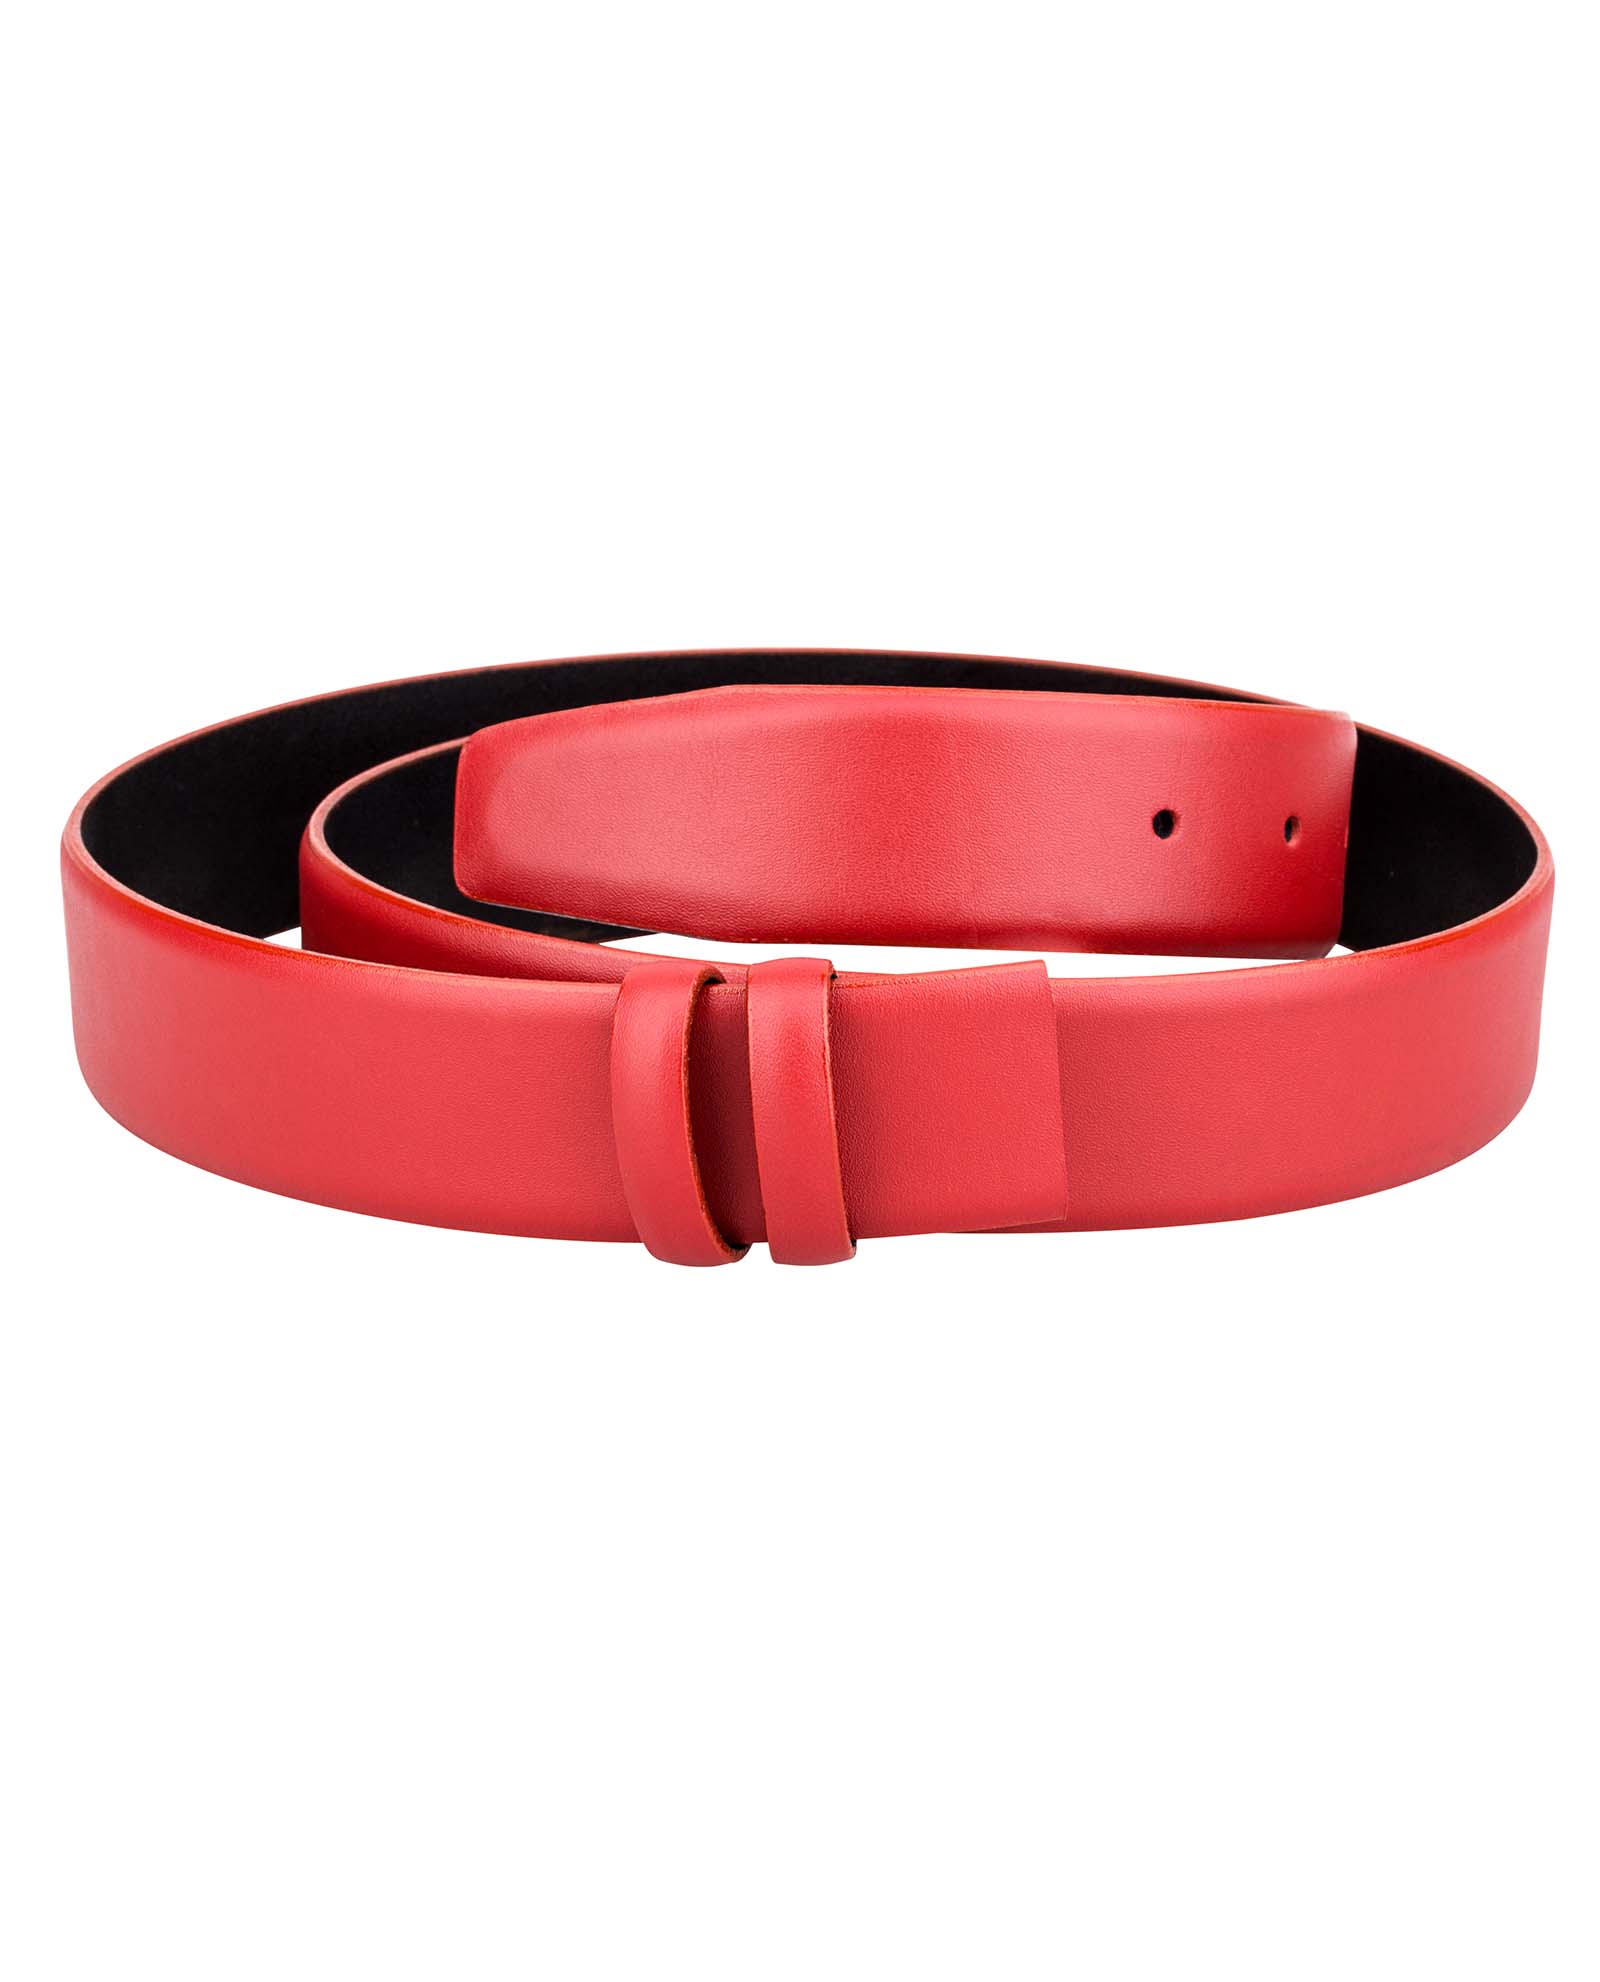 Buy Womens Red Belt Strap - LeatherBeltsOnline.com - Free Shipping